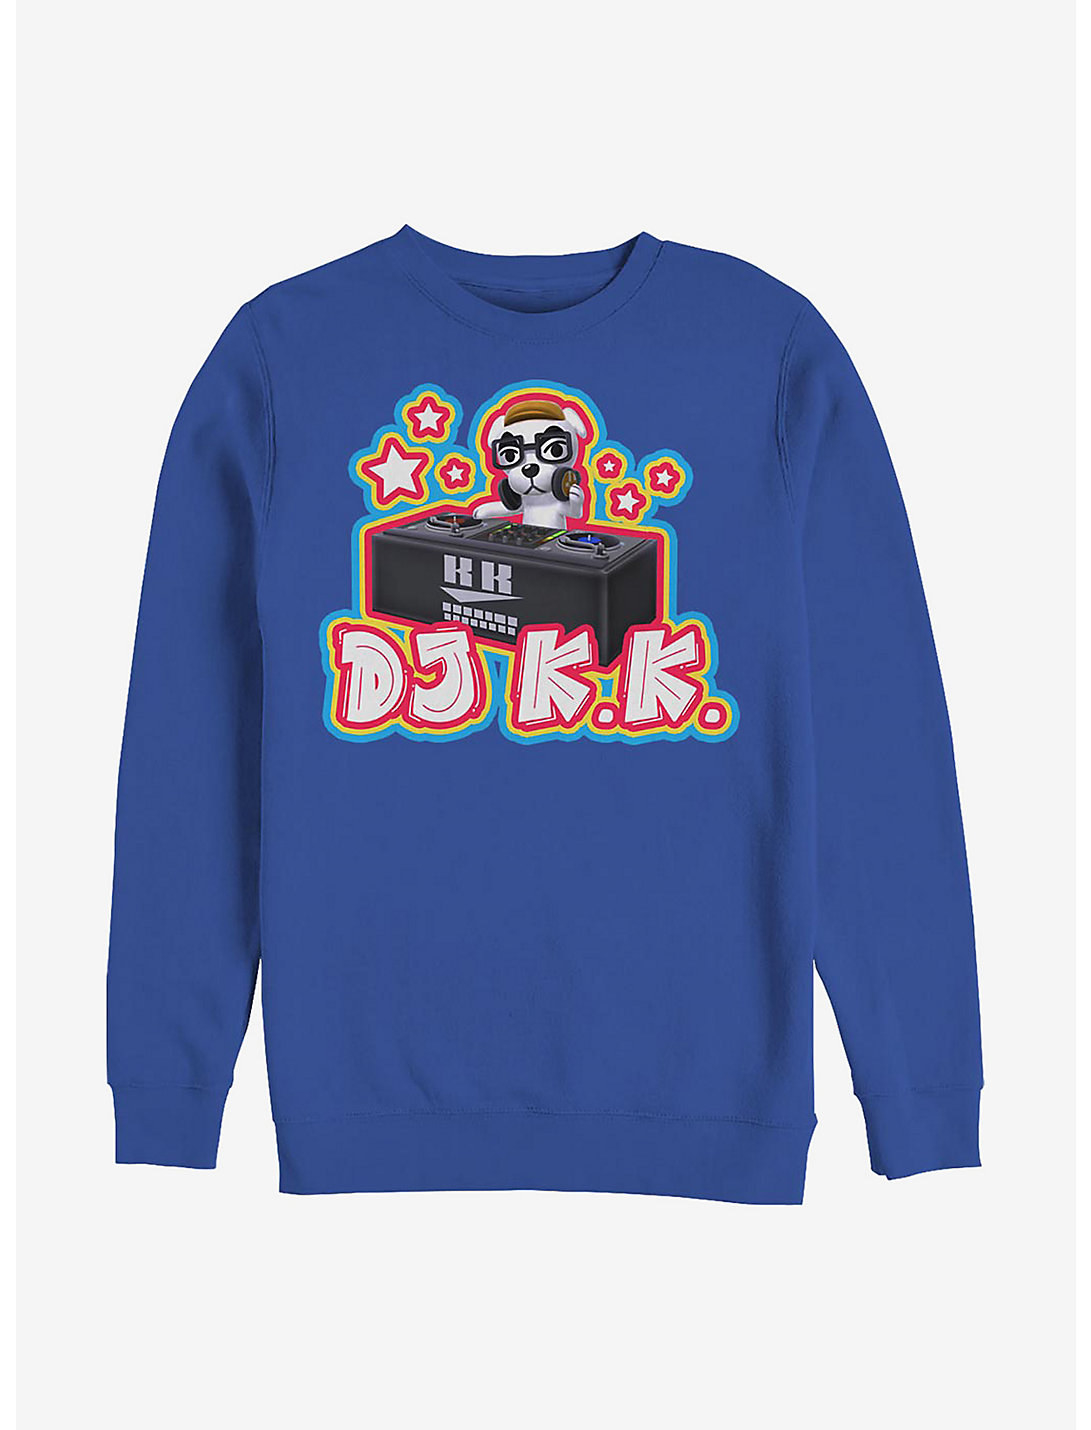 a blue sweatshirt with dj kk slider on the front